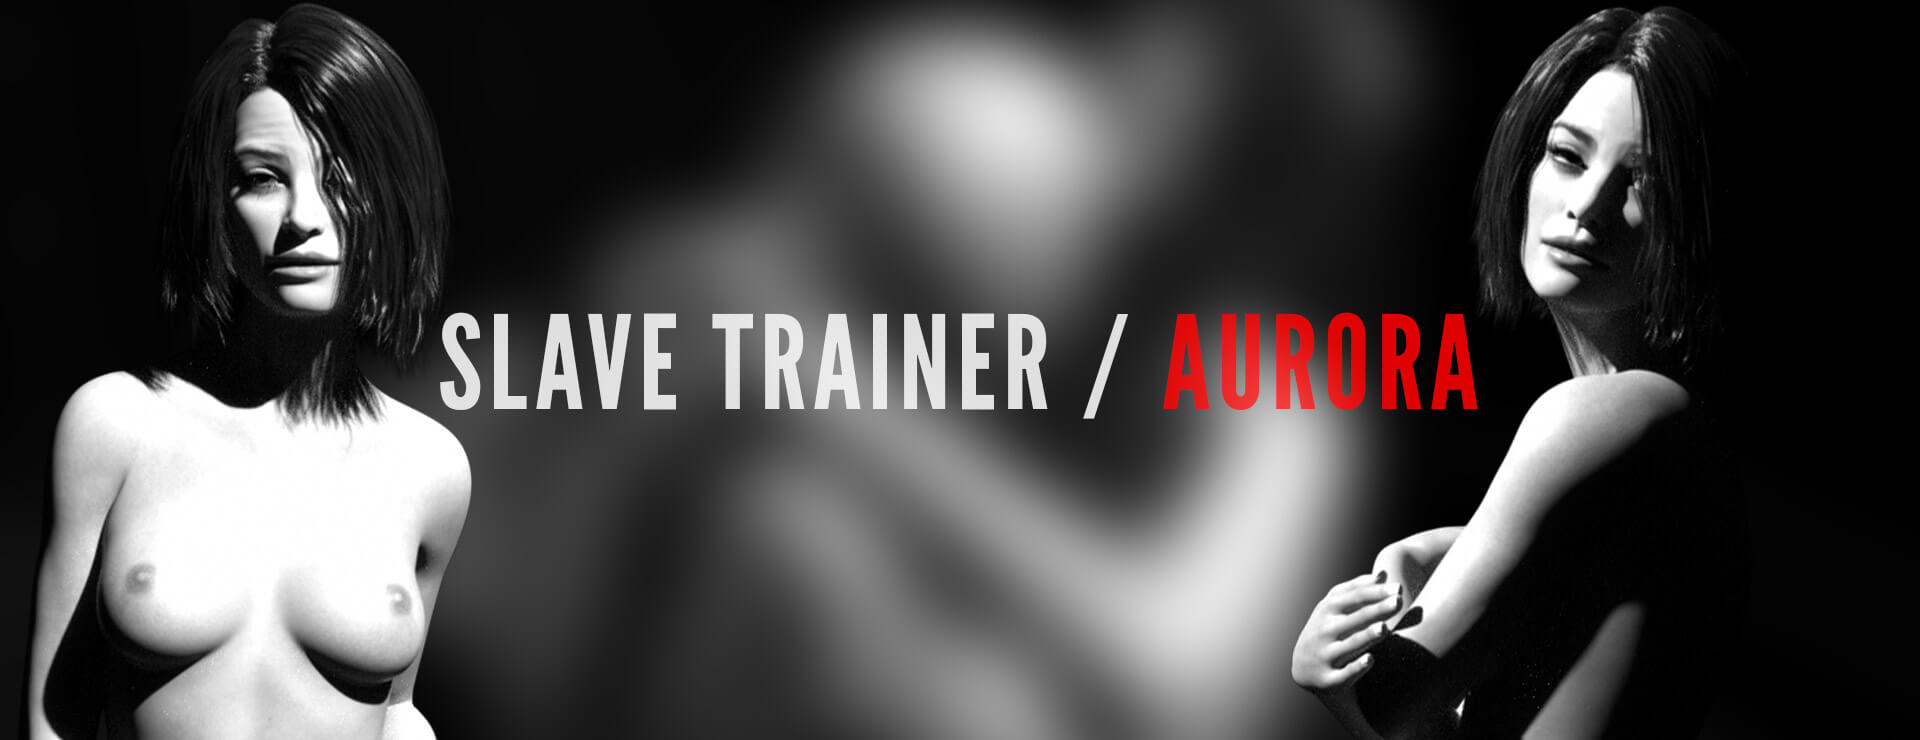 Slave Trainer Aurora - Simulation Jeu